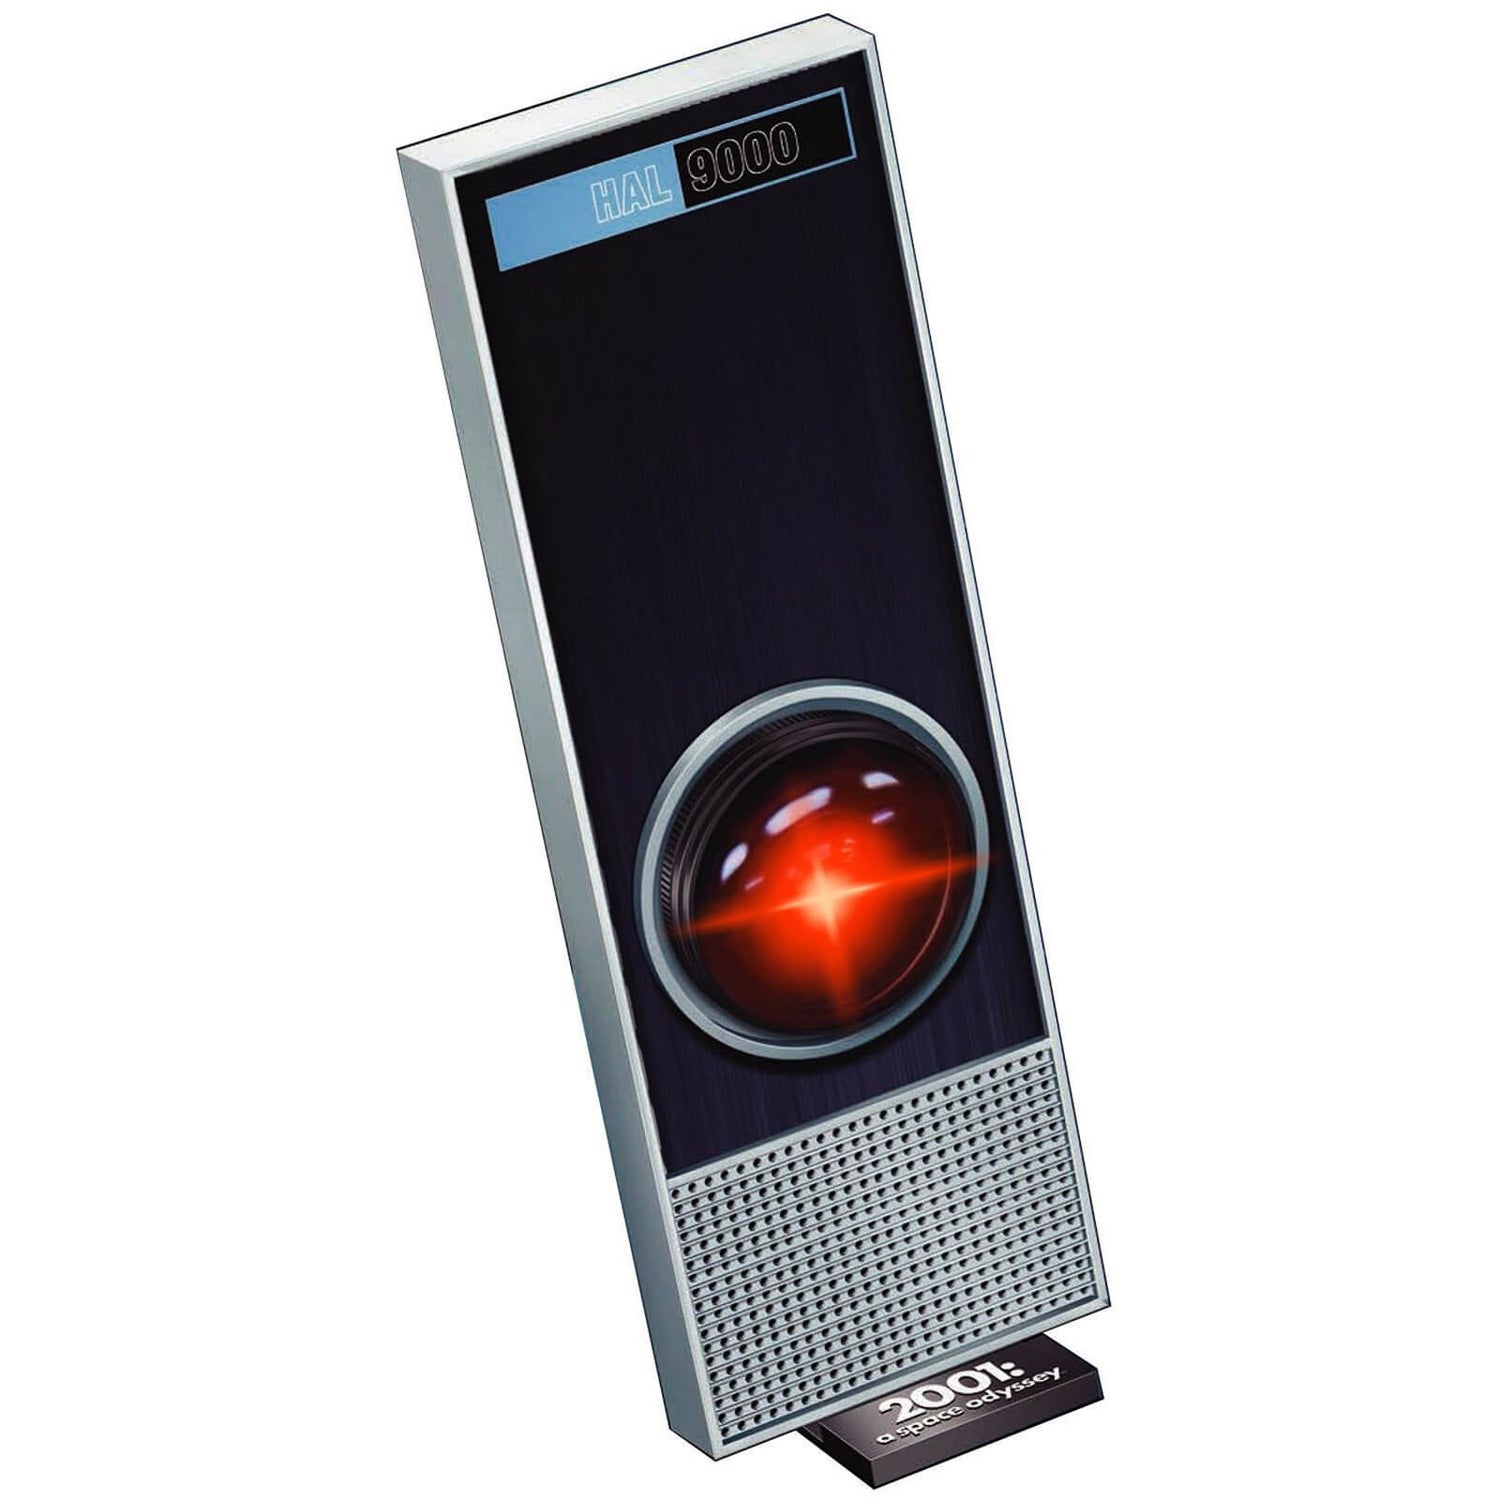 1:1 Hal 9000 - 2001: A Space Odyssey - Plastikmodellbausatz